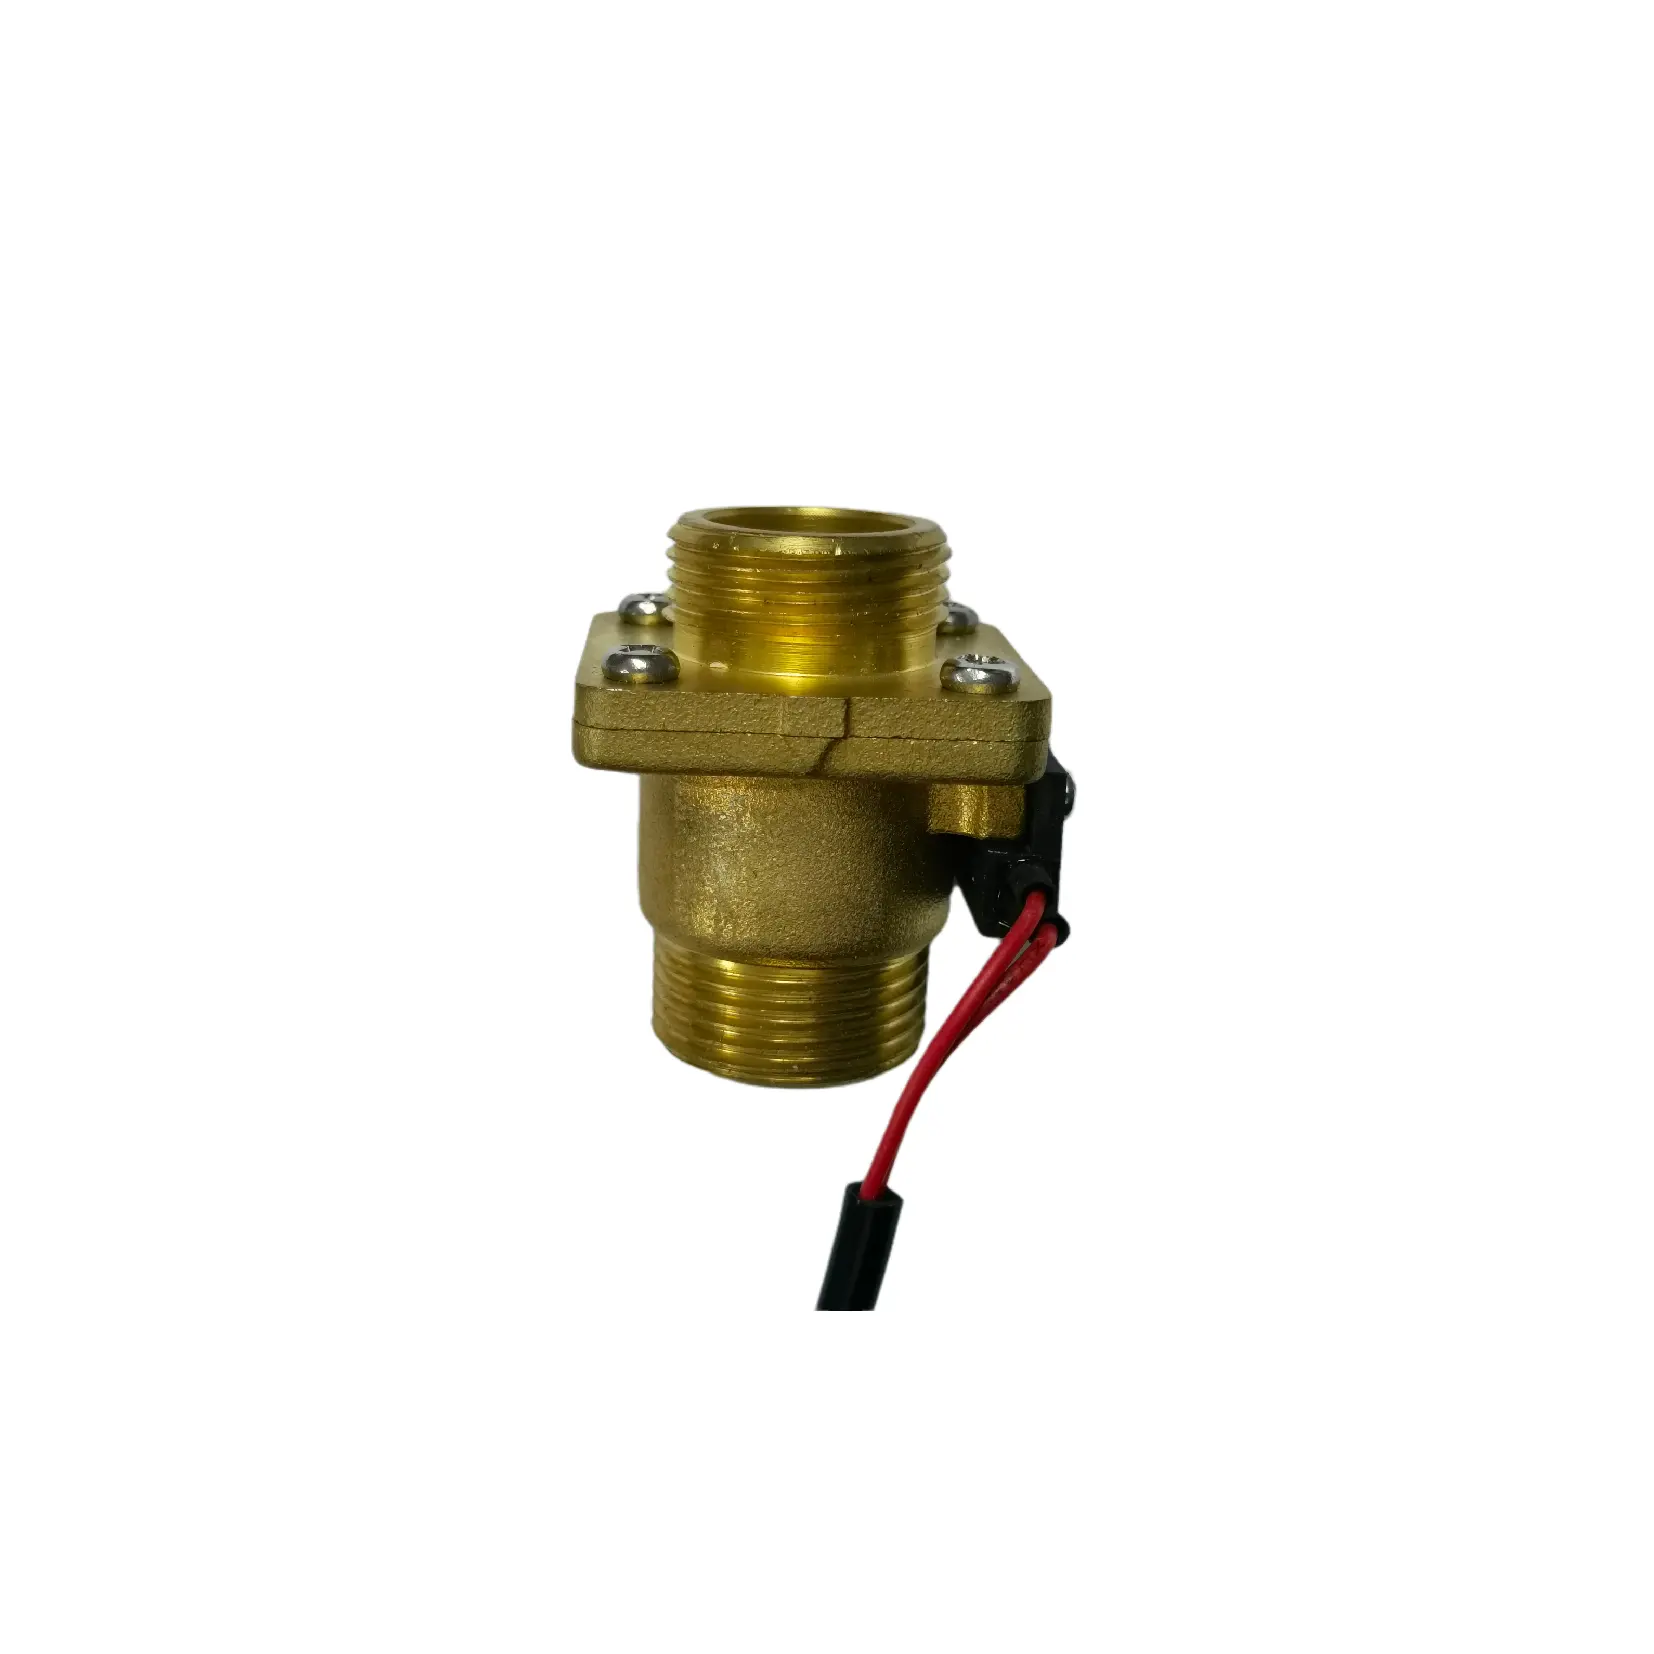 Brass Houle signal sensor liquid flow meter for water heater control switch